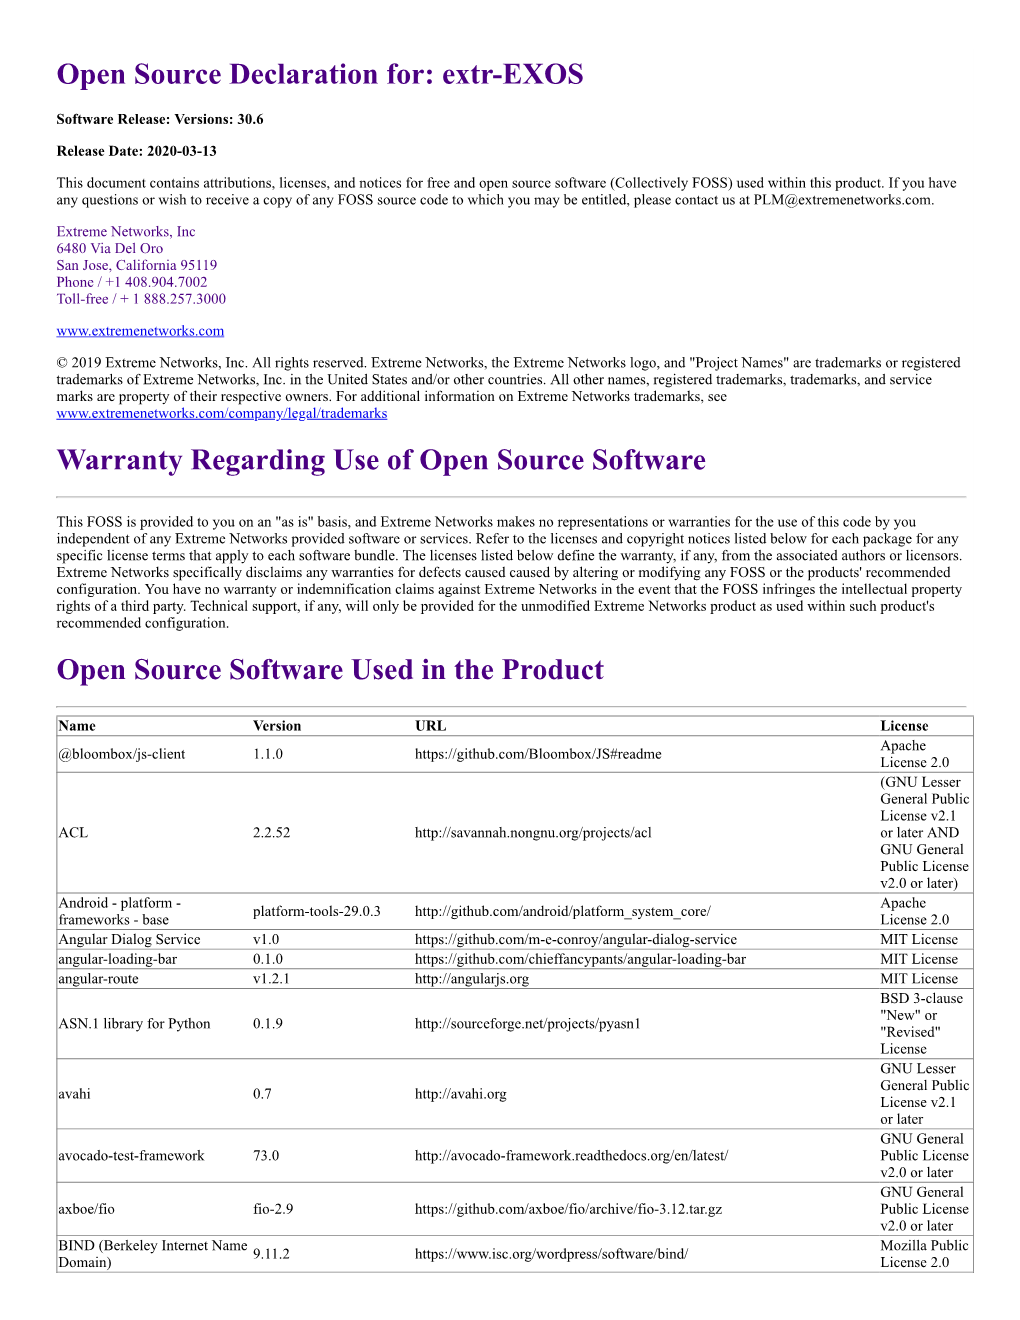 Extr-EXOS Warranty Regarding Use of Open Source Software Open